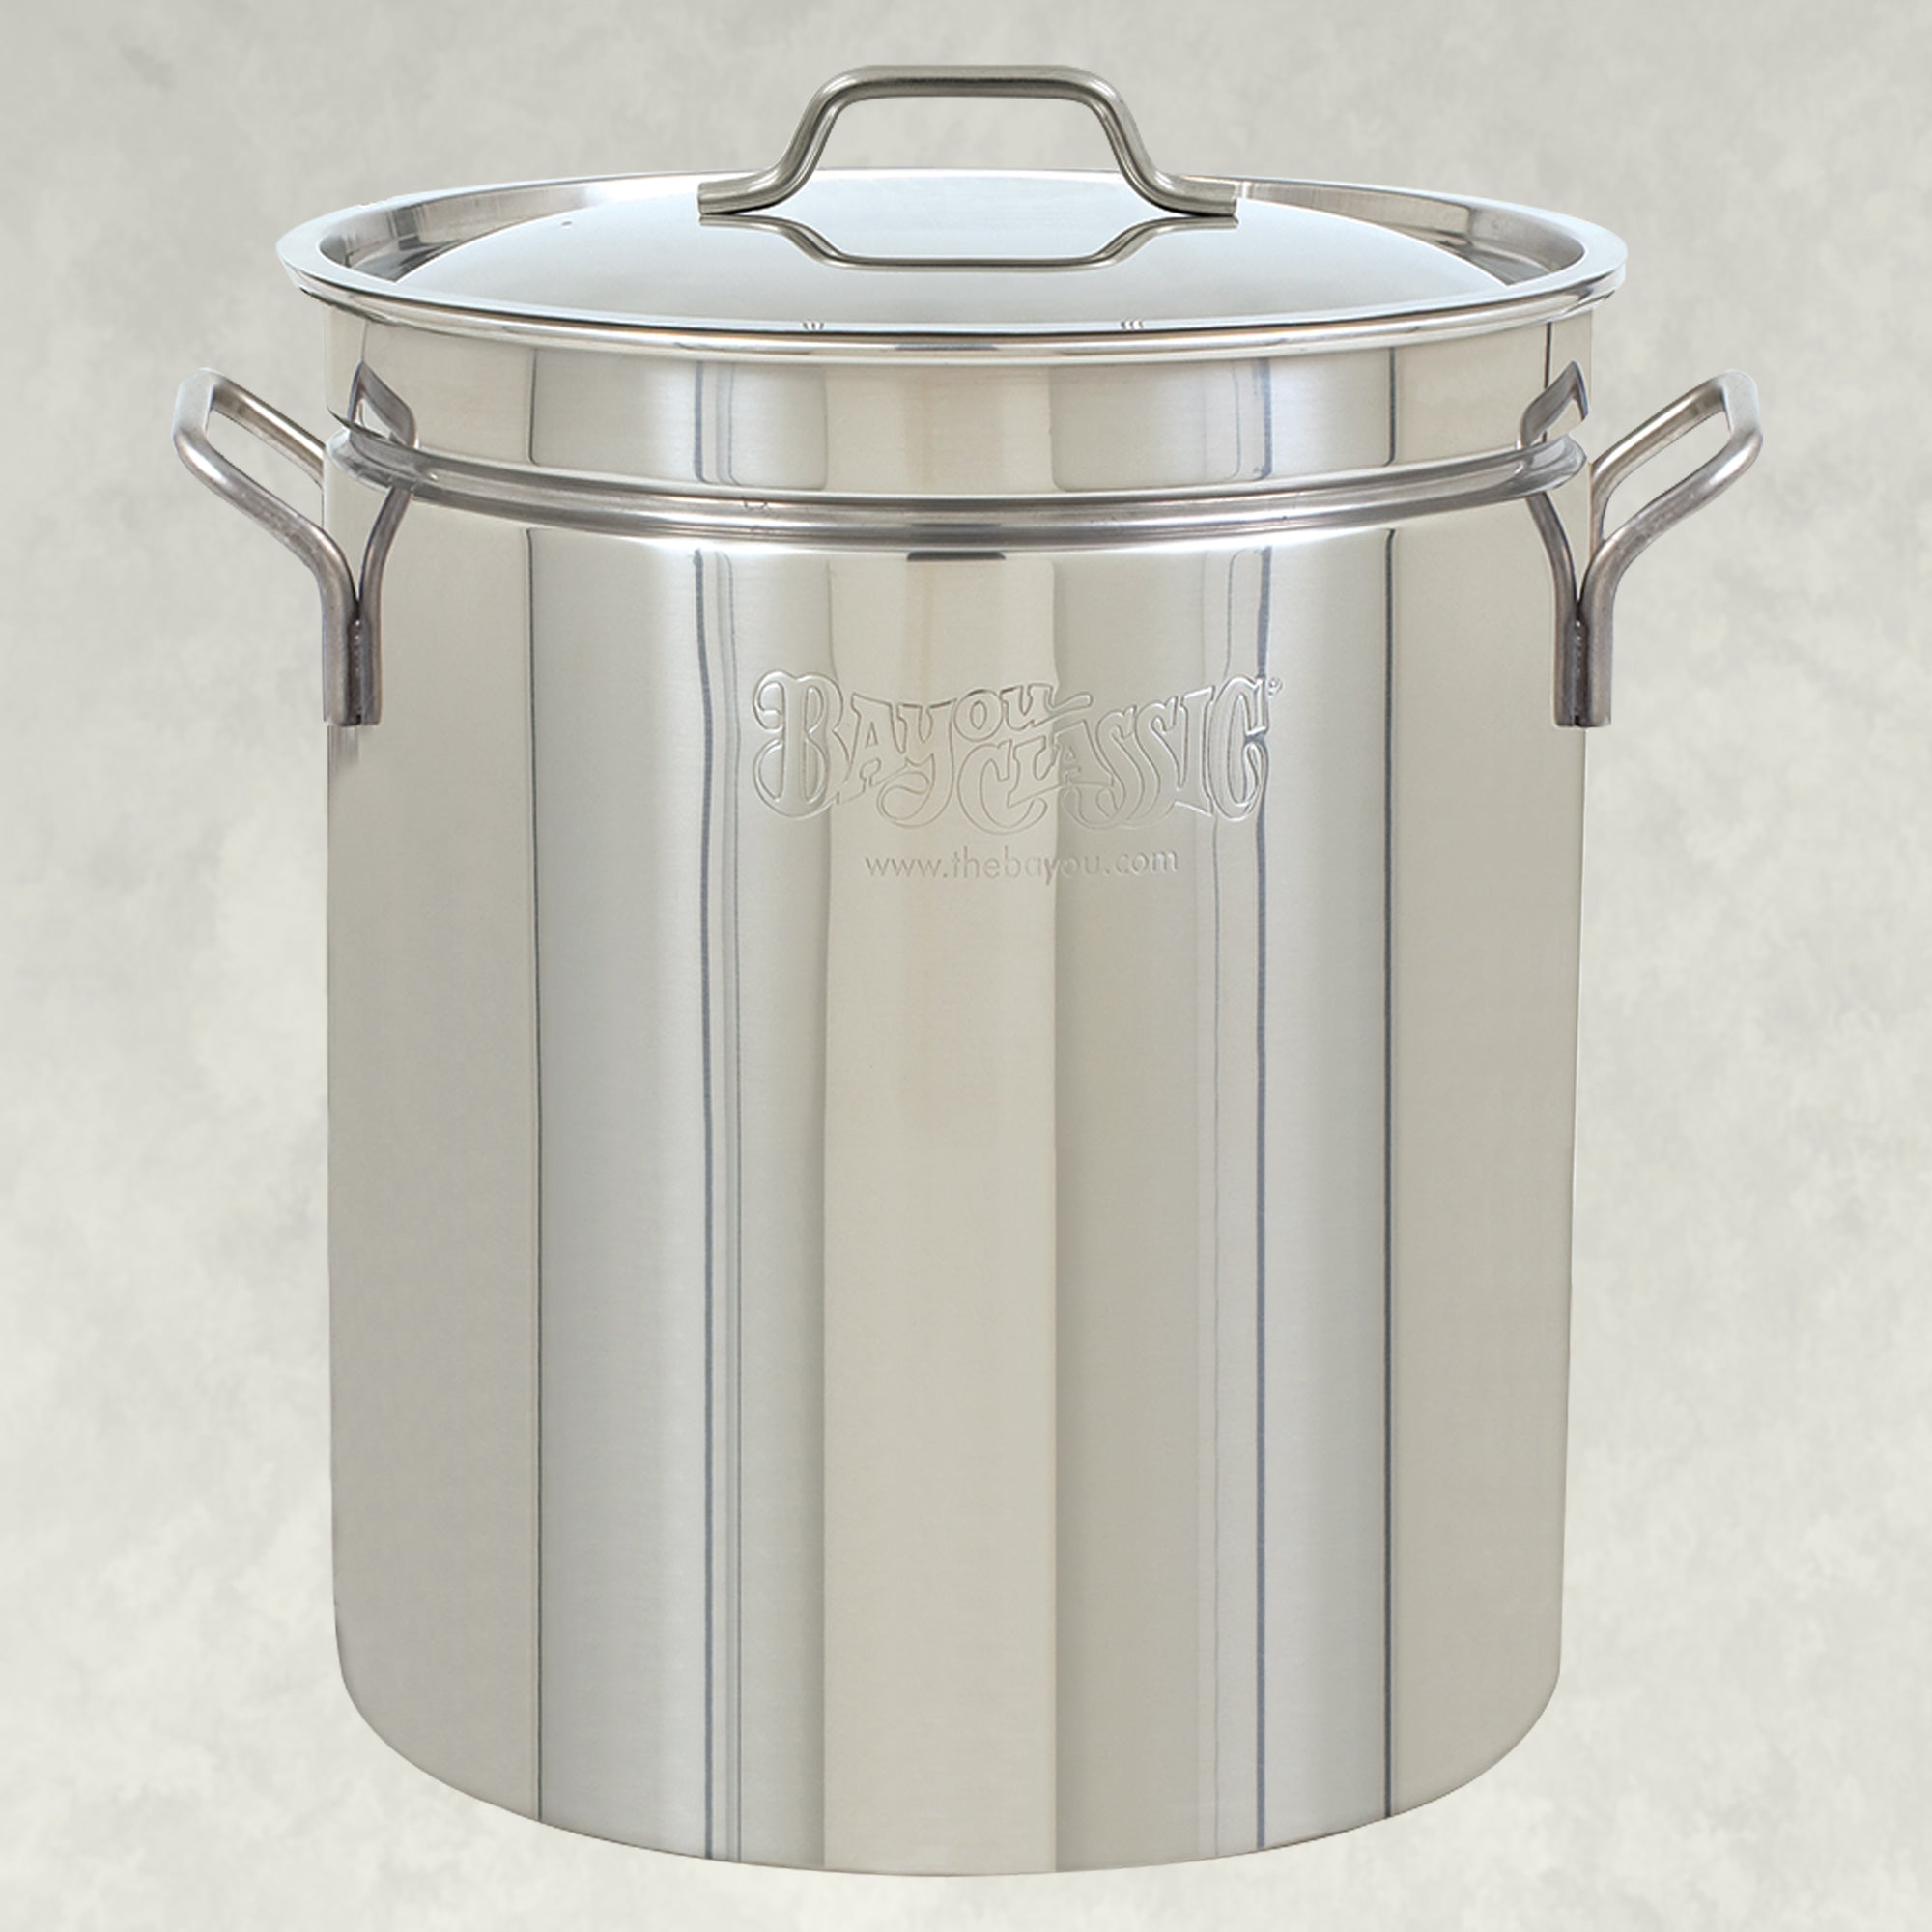 Stock-Pot 16 Qt Aluminum Steam-Pot with Steamer Rack Tamales Heavy